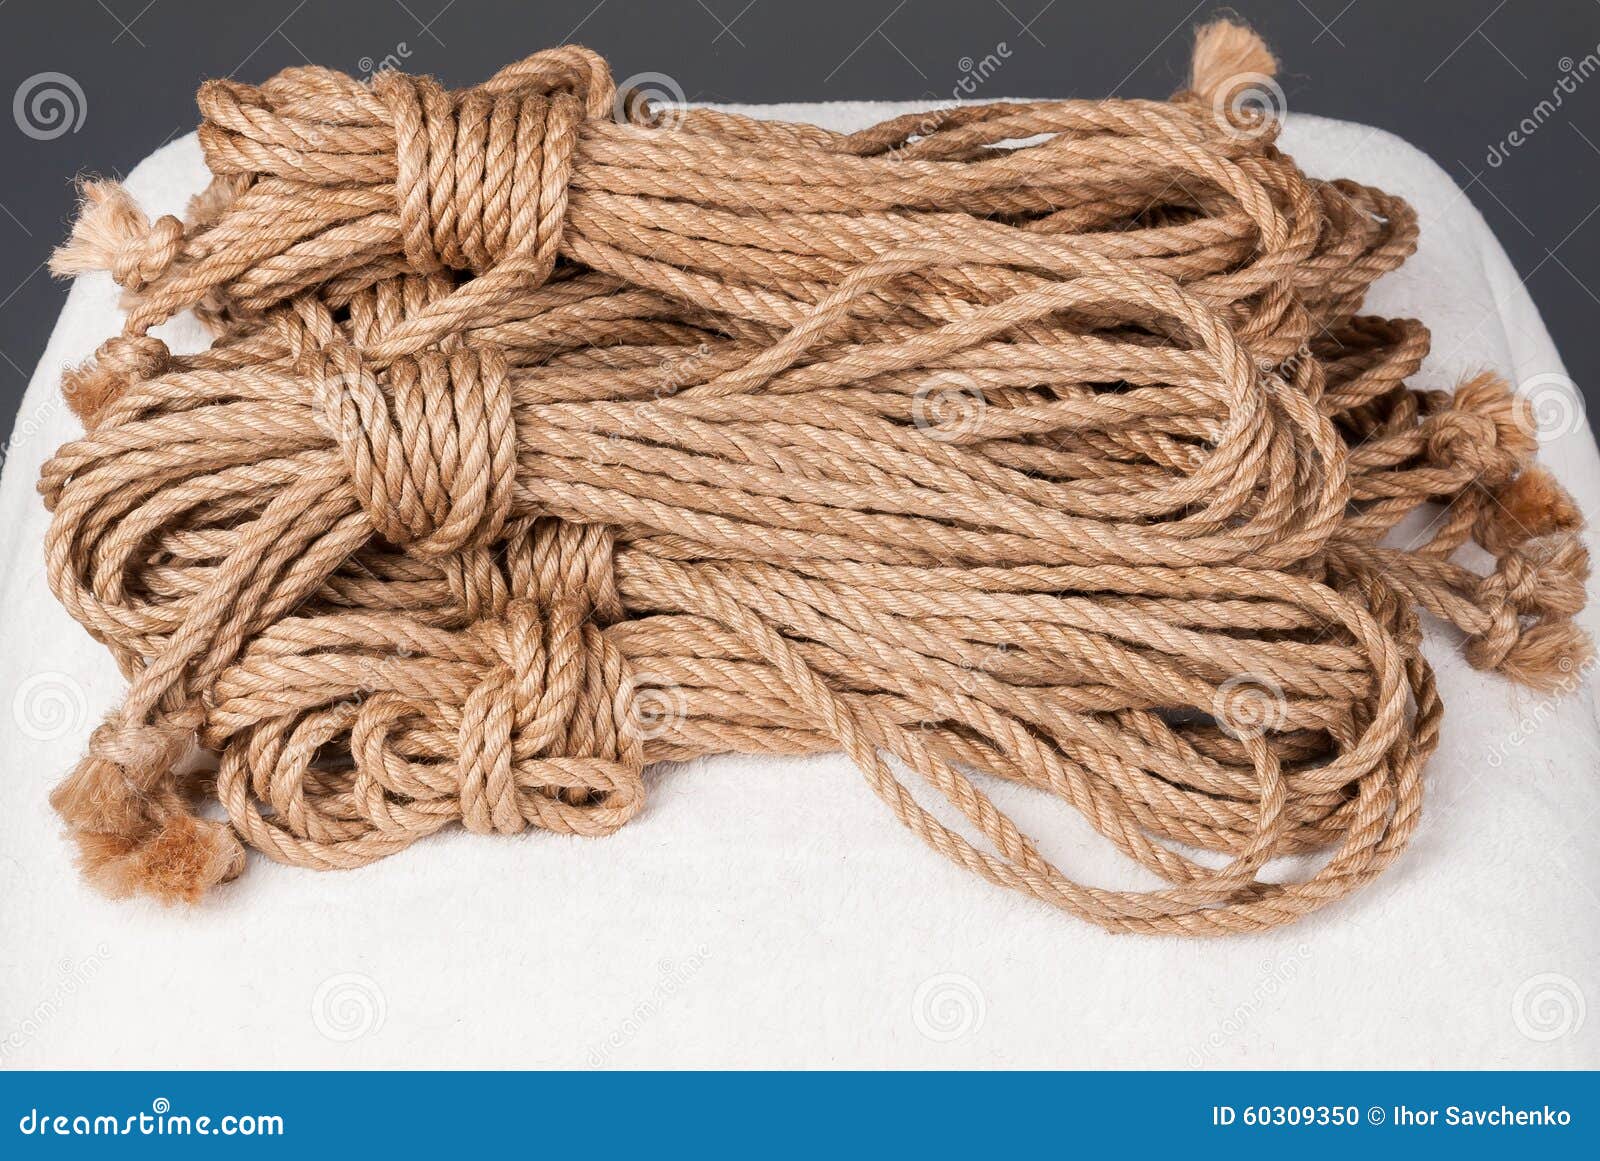 234 Bondage Ropes Stock Photos - Free & Royalty-Free Stock